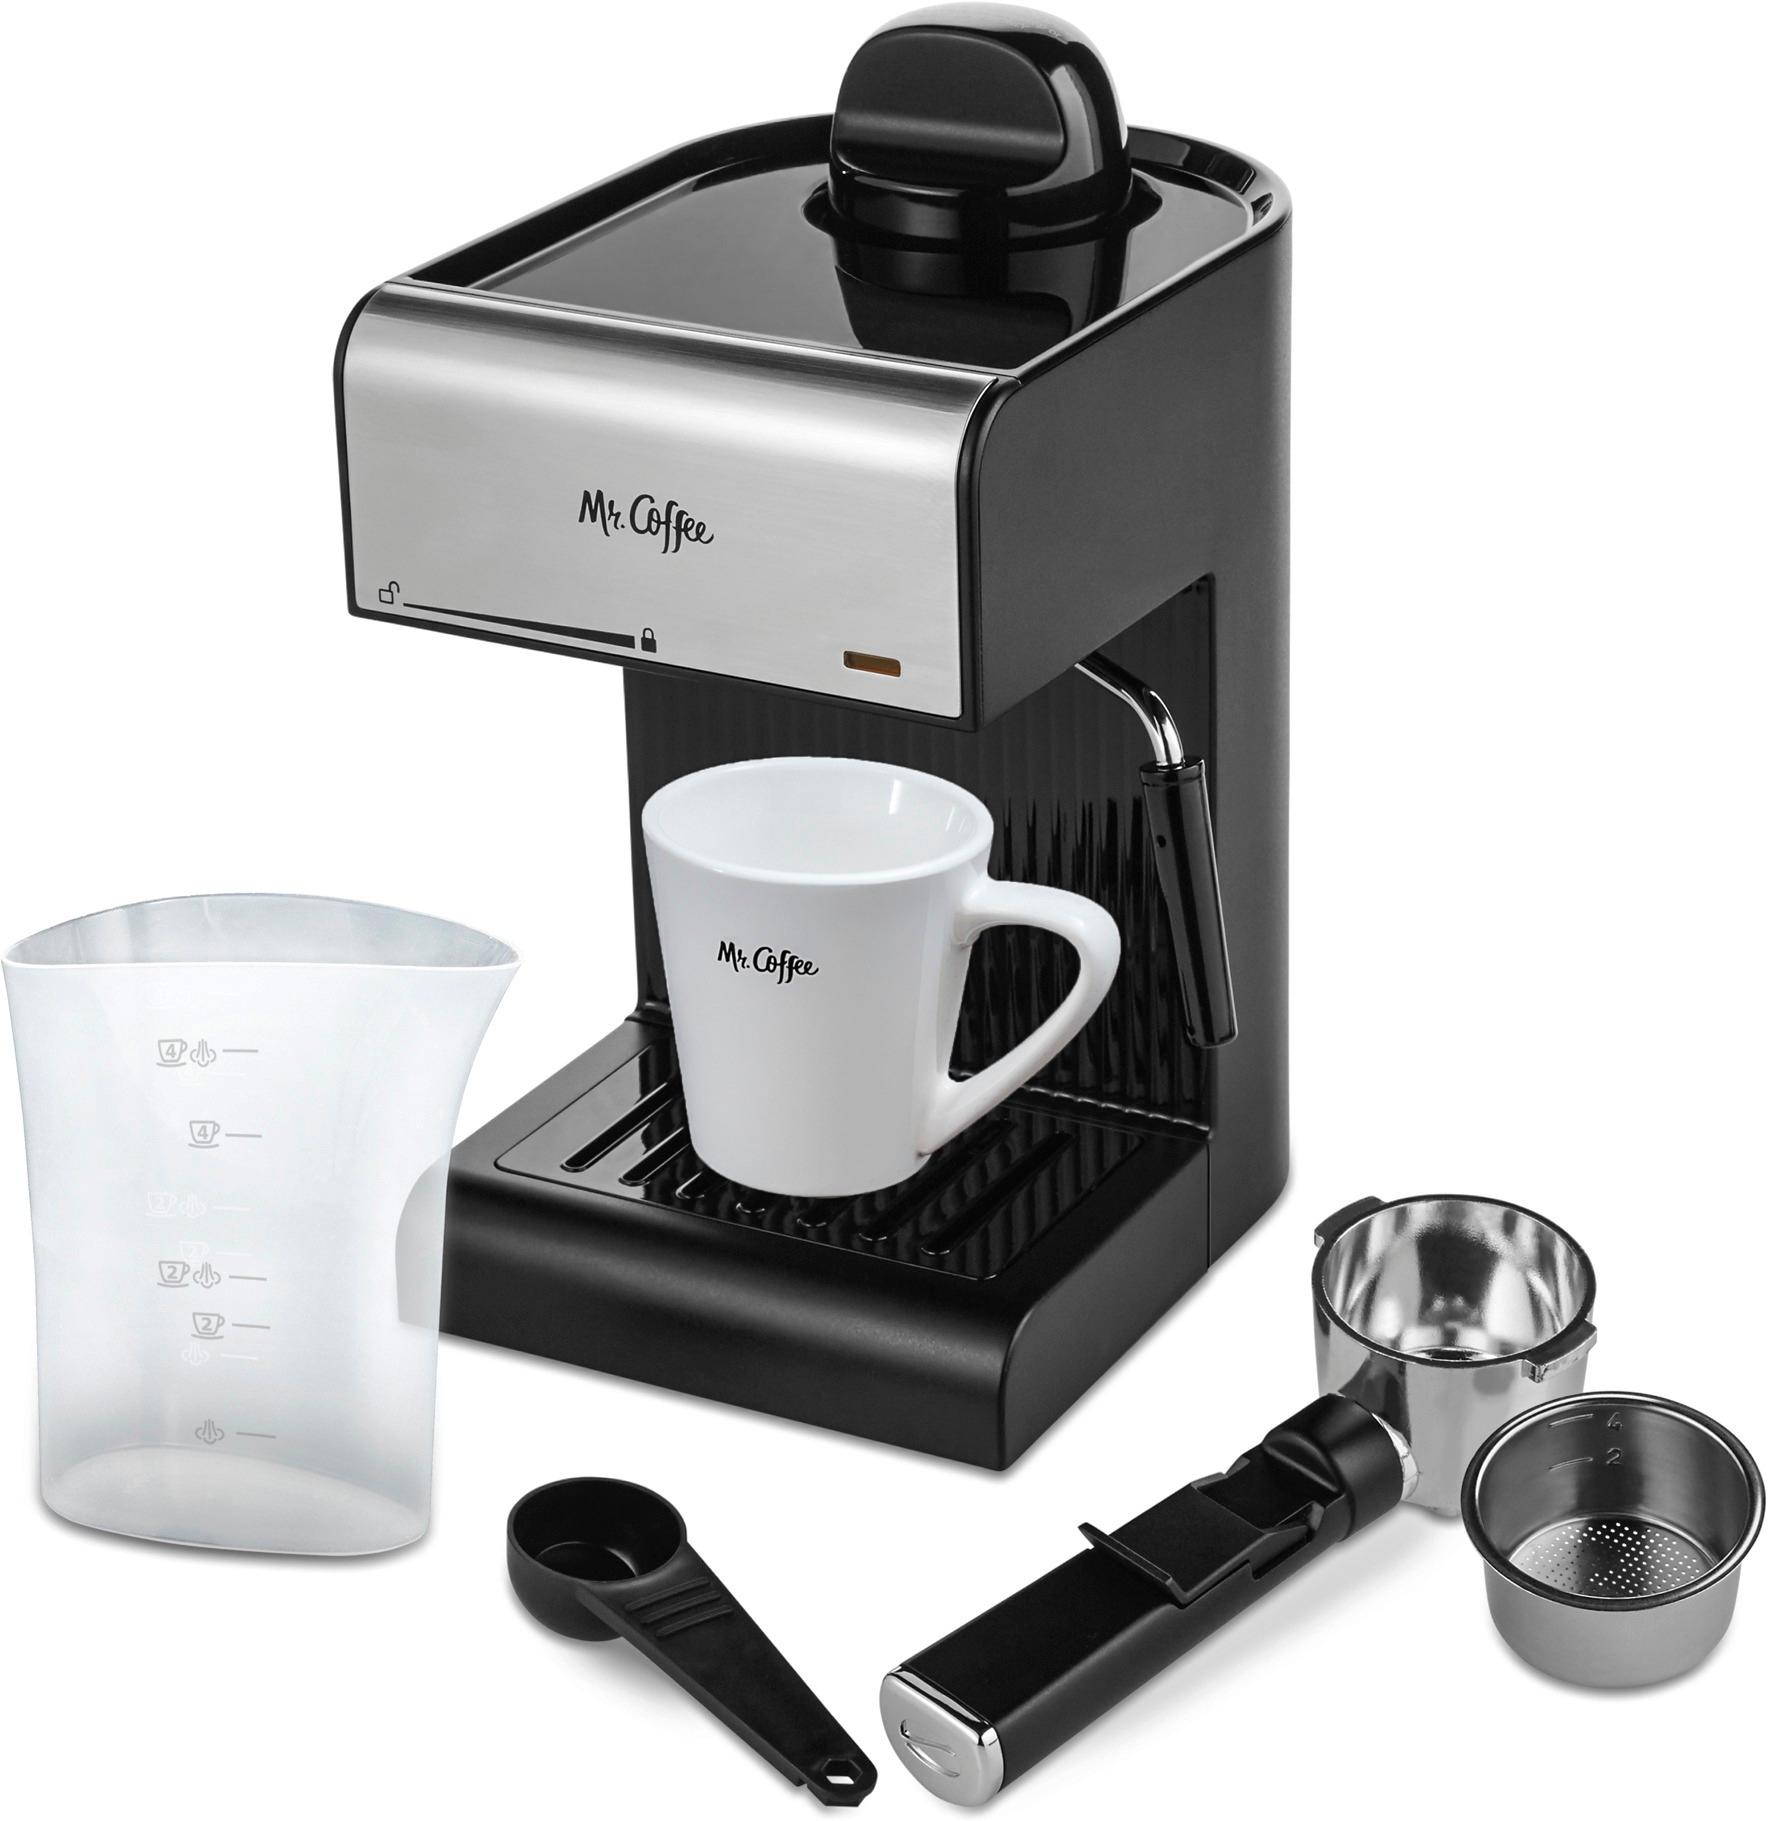 Mr. Coffee® Black/Chrome Programmable Coffee Maker, 5 c - Harris Teeter